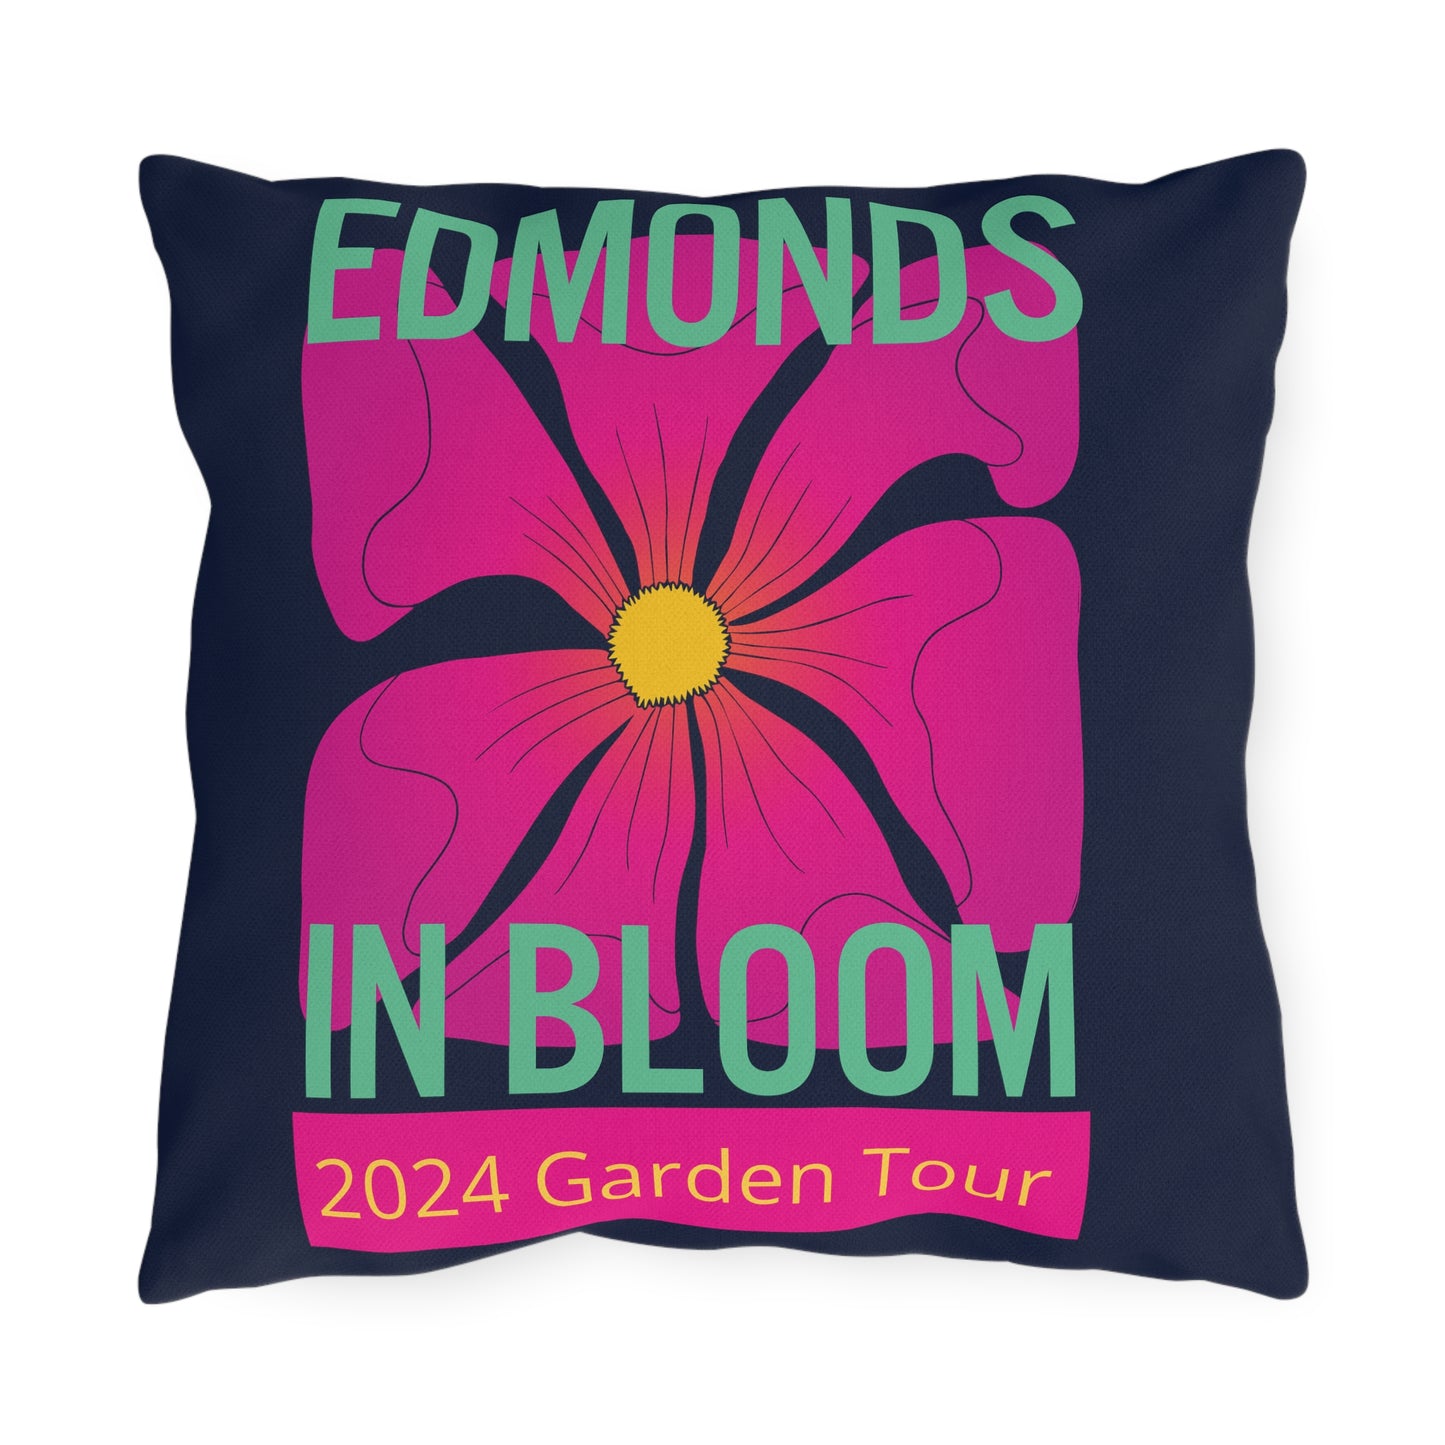 Edmonds in Bloom 2024 Garden Tour Outdoor Pillows (Double Print)